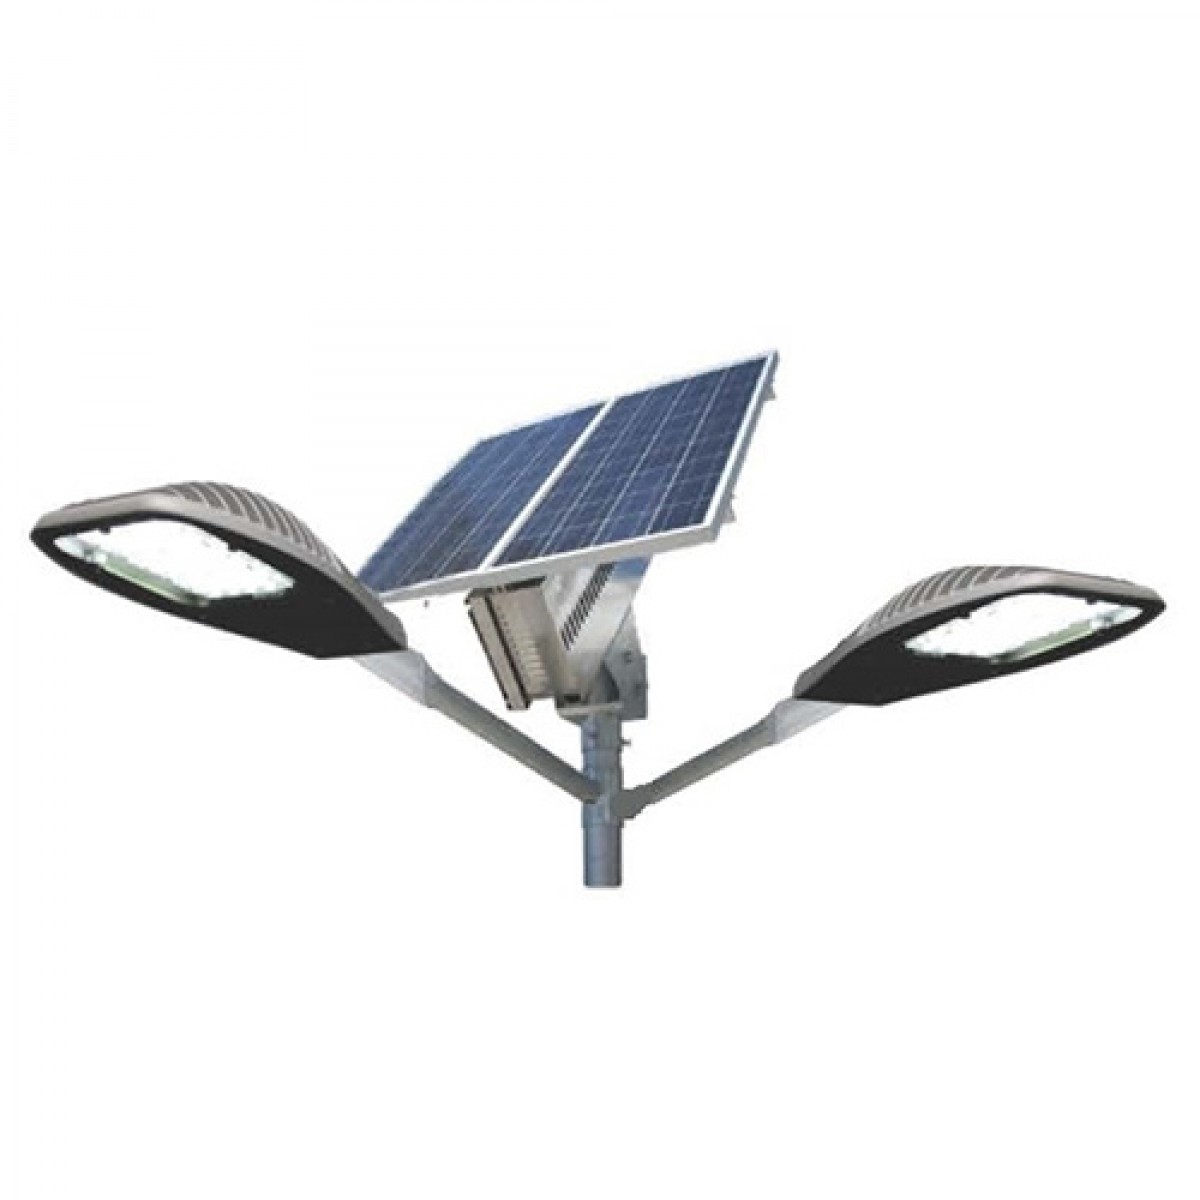 SOLAR DOUBLE CONSOLE STREET LAMP 50W